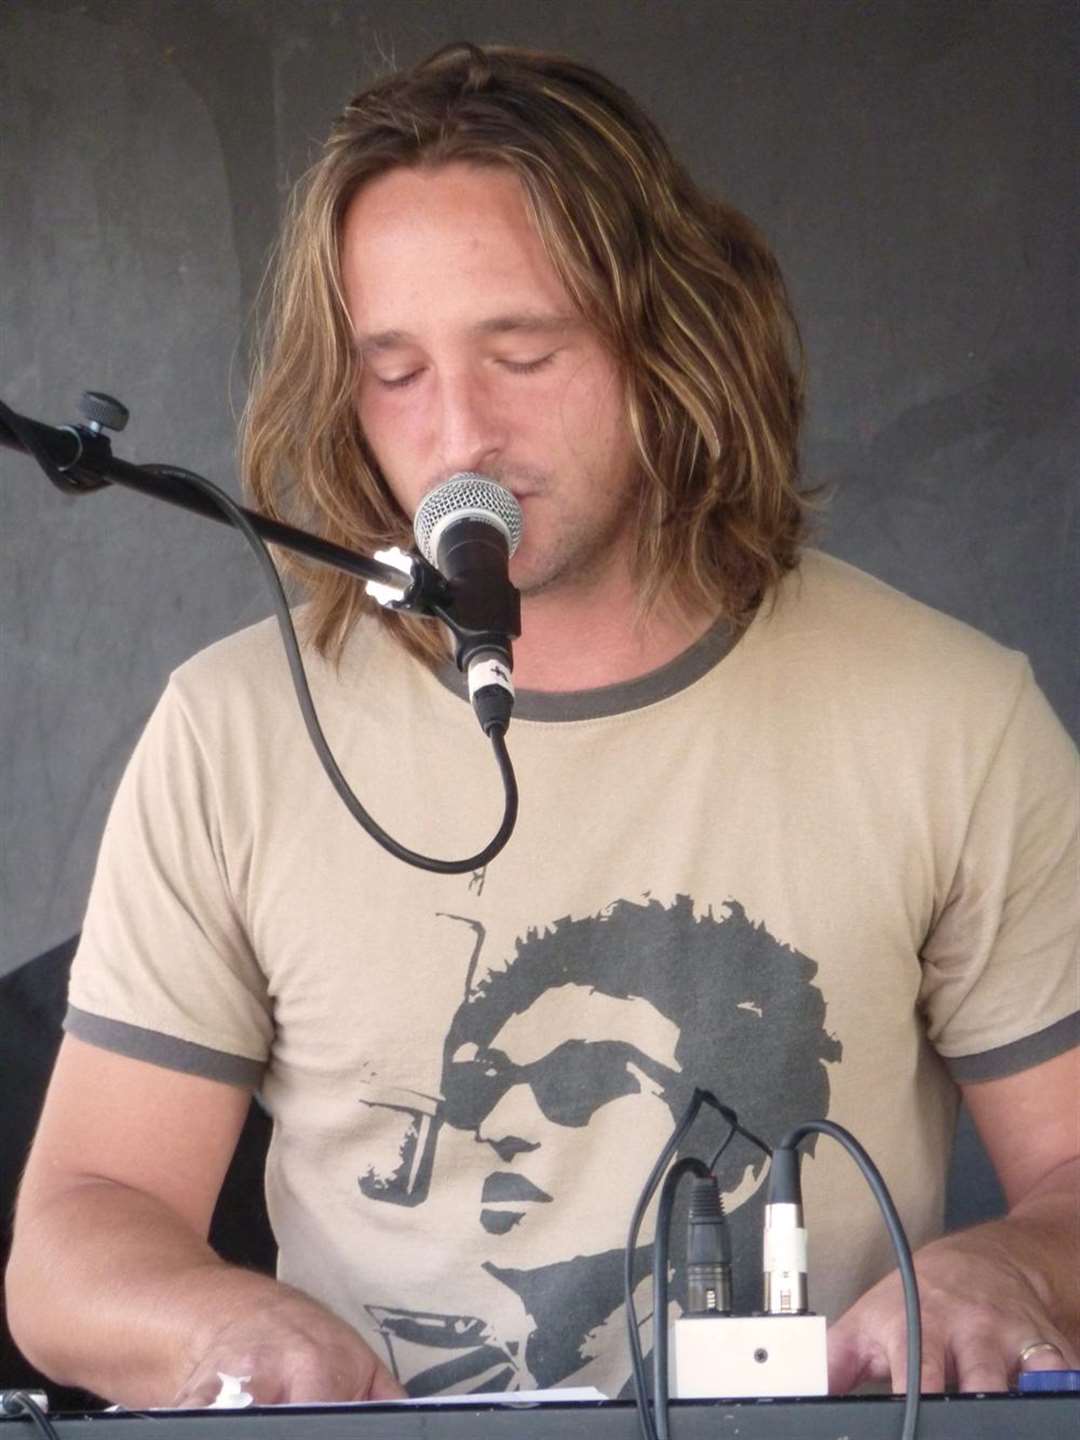 Ben Mills is headlining this year's Kingsdown Rocks music festival